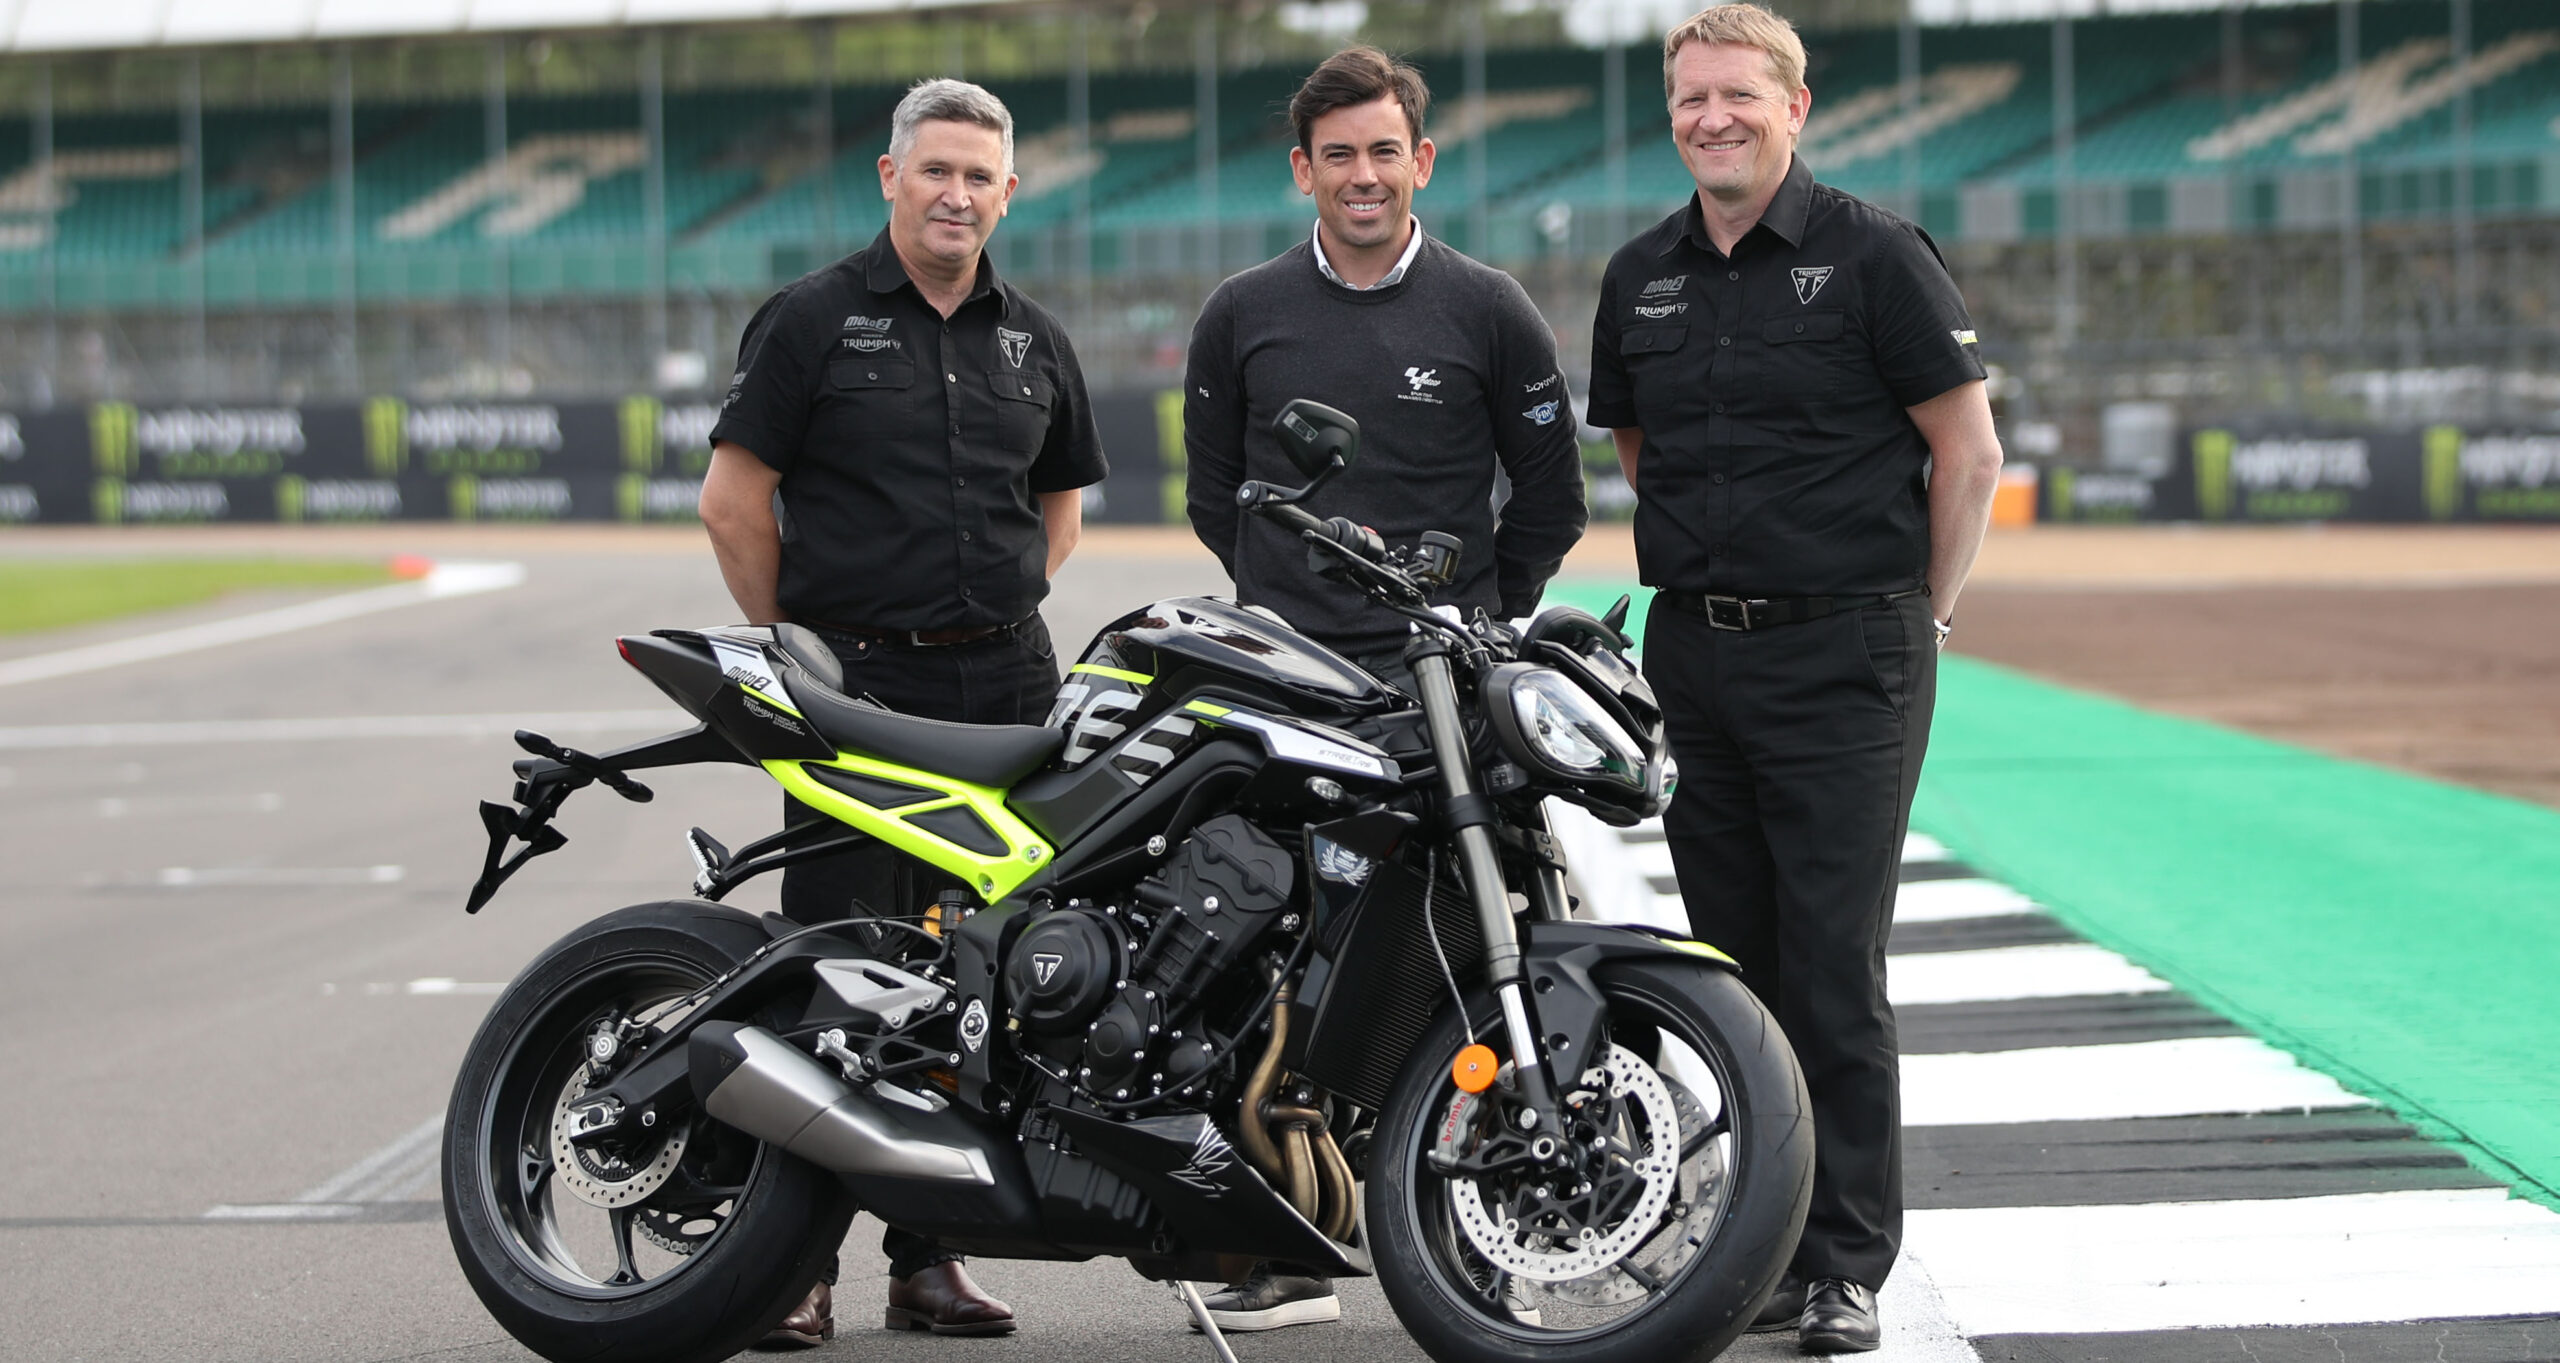 Triumph announces extended partnership with Moto2